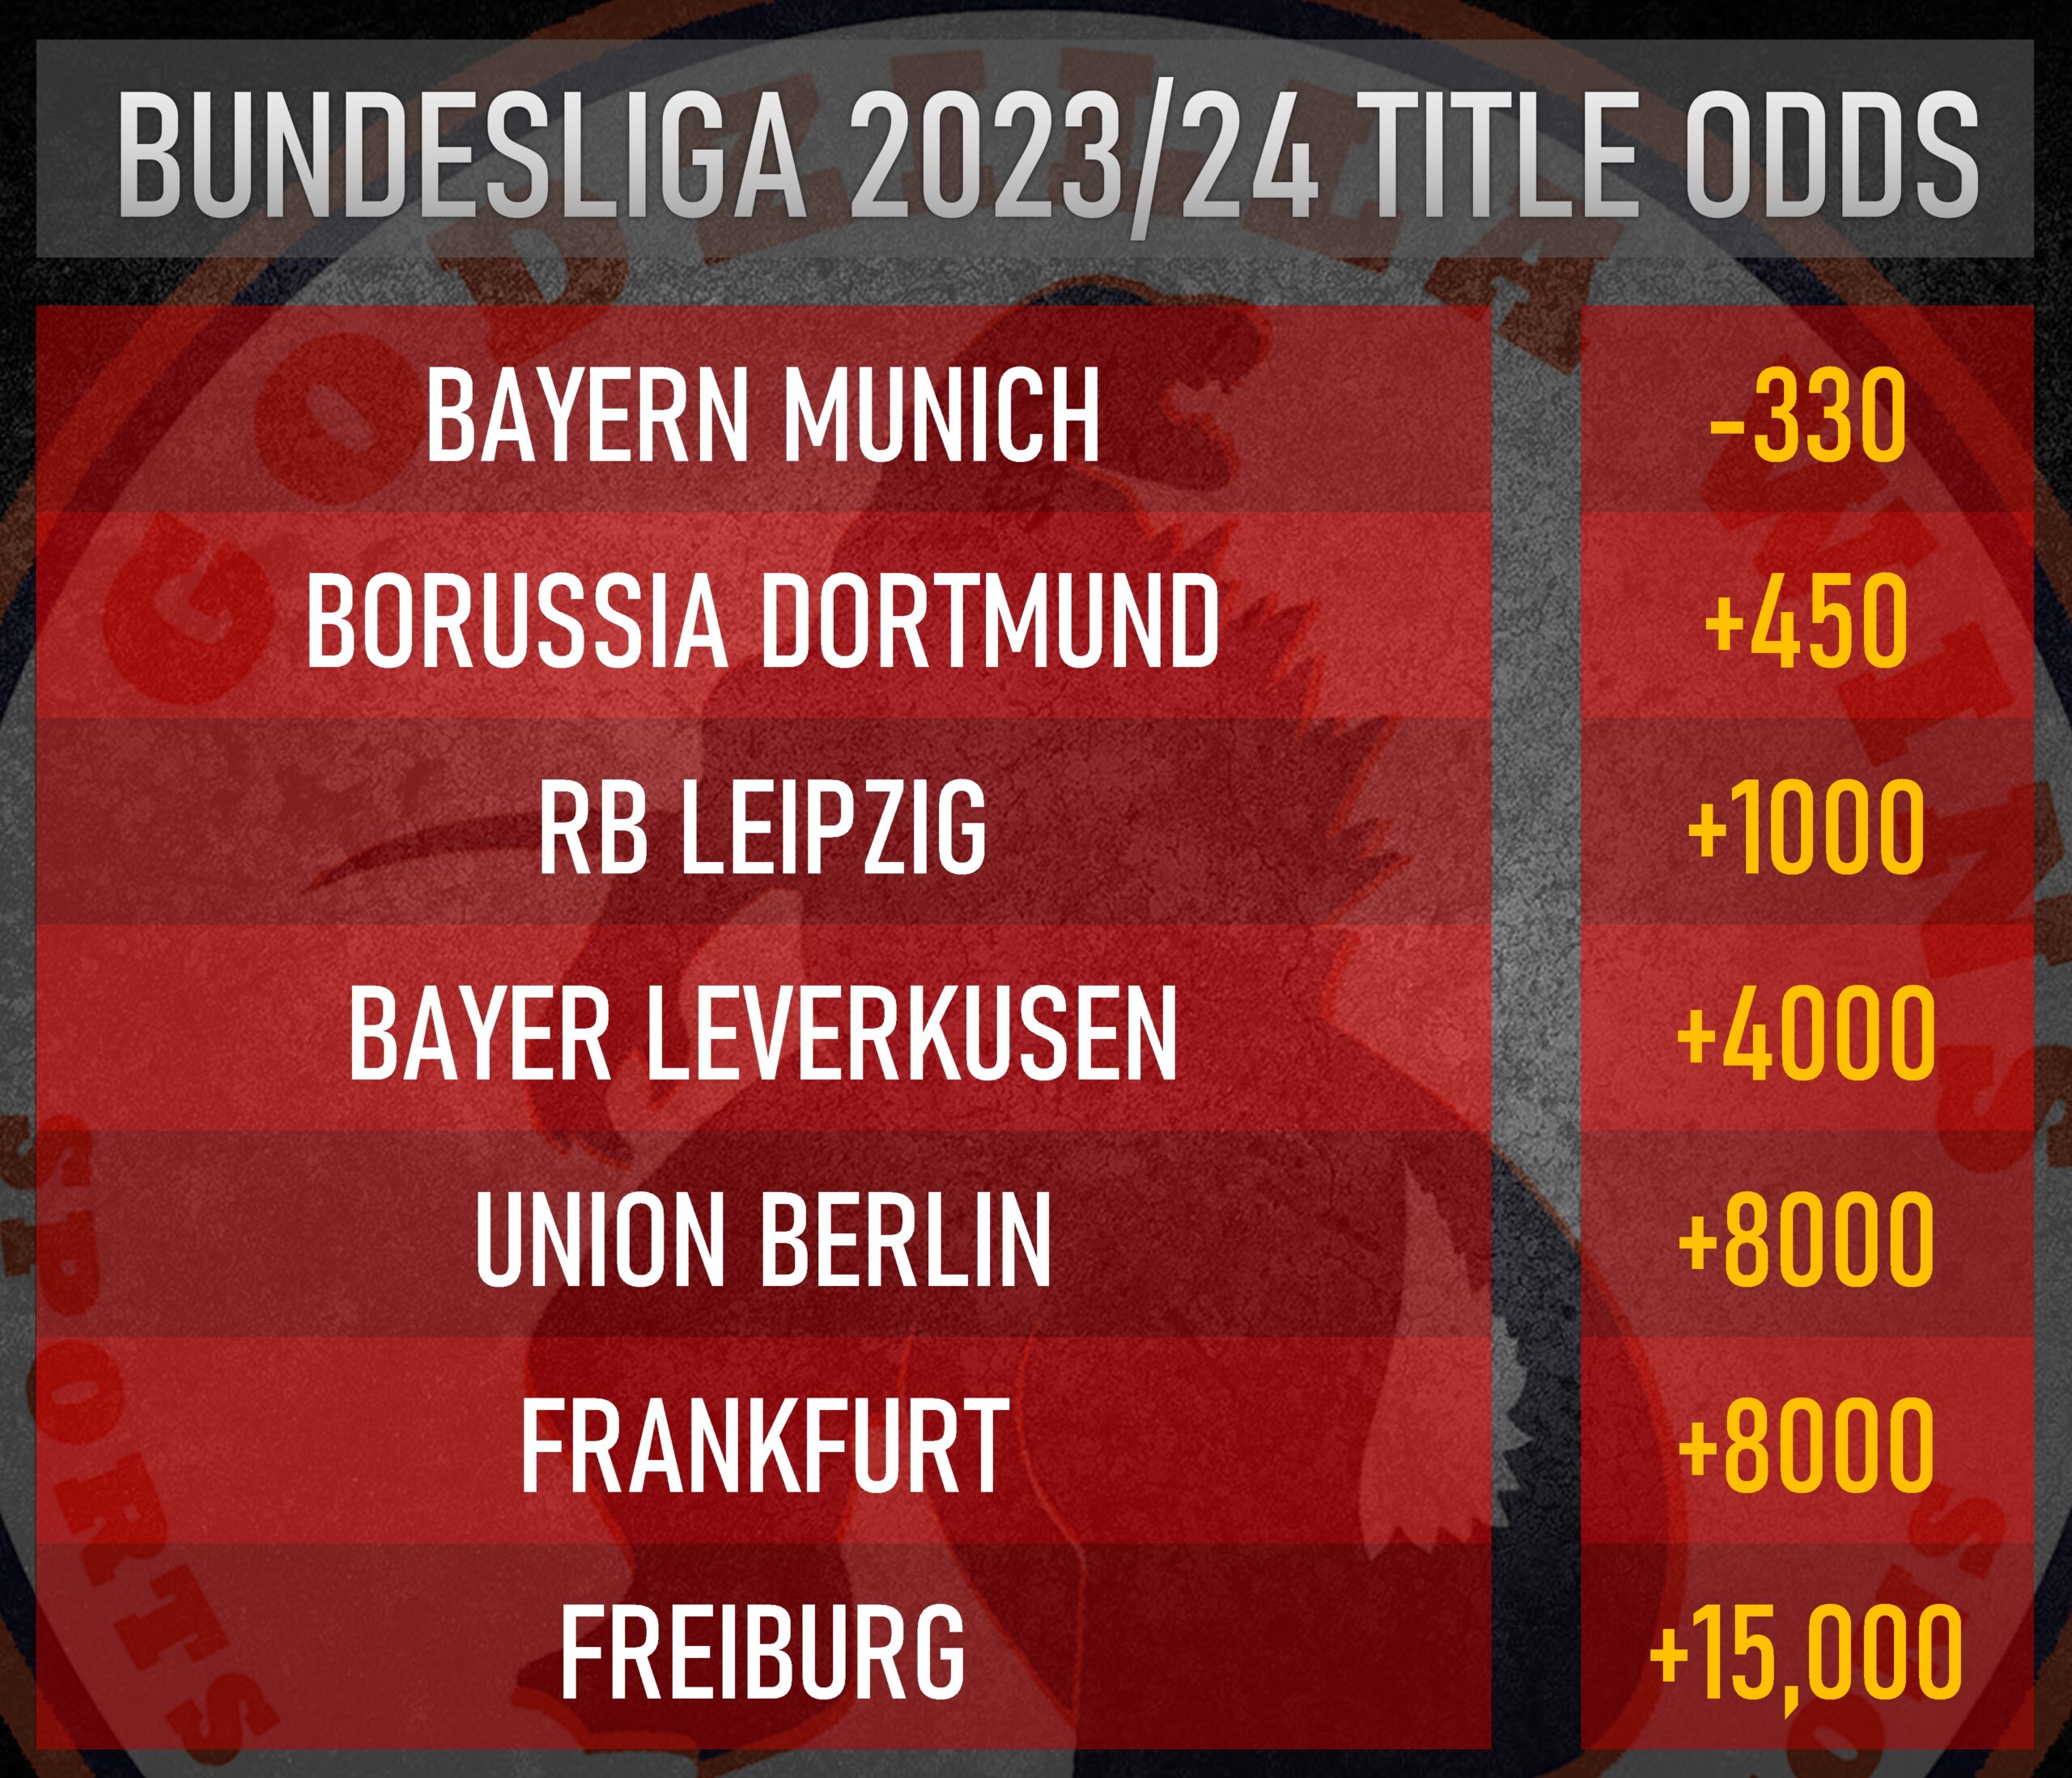 Union Berlin title odds